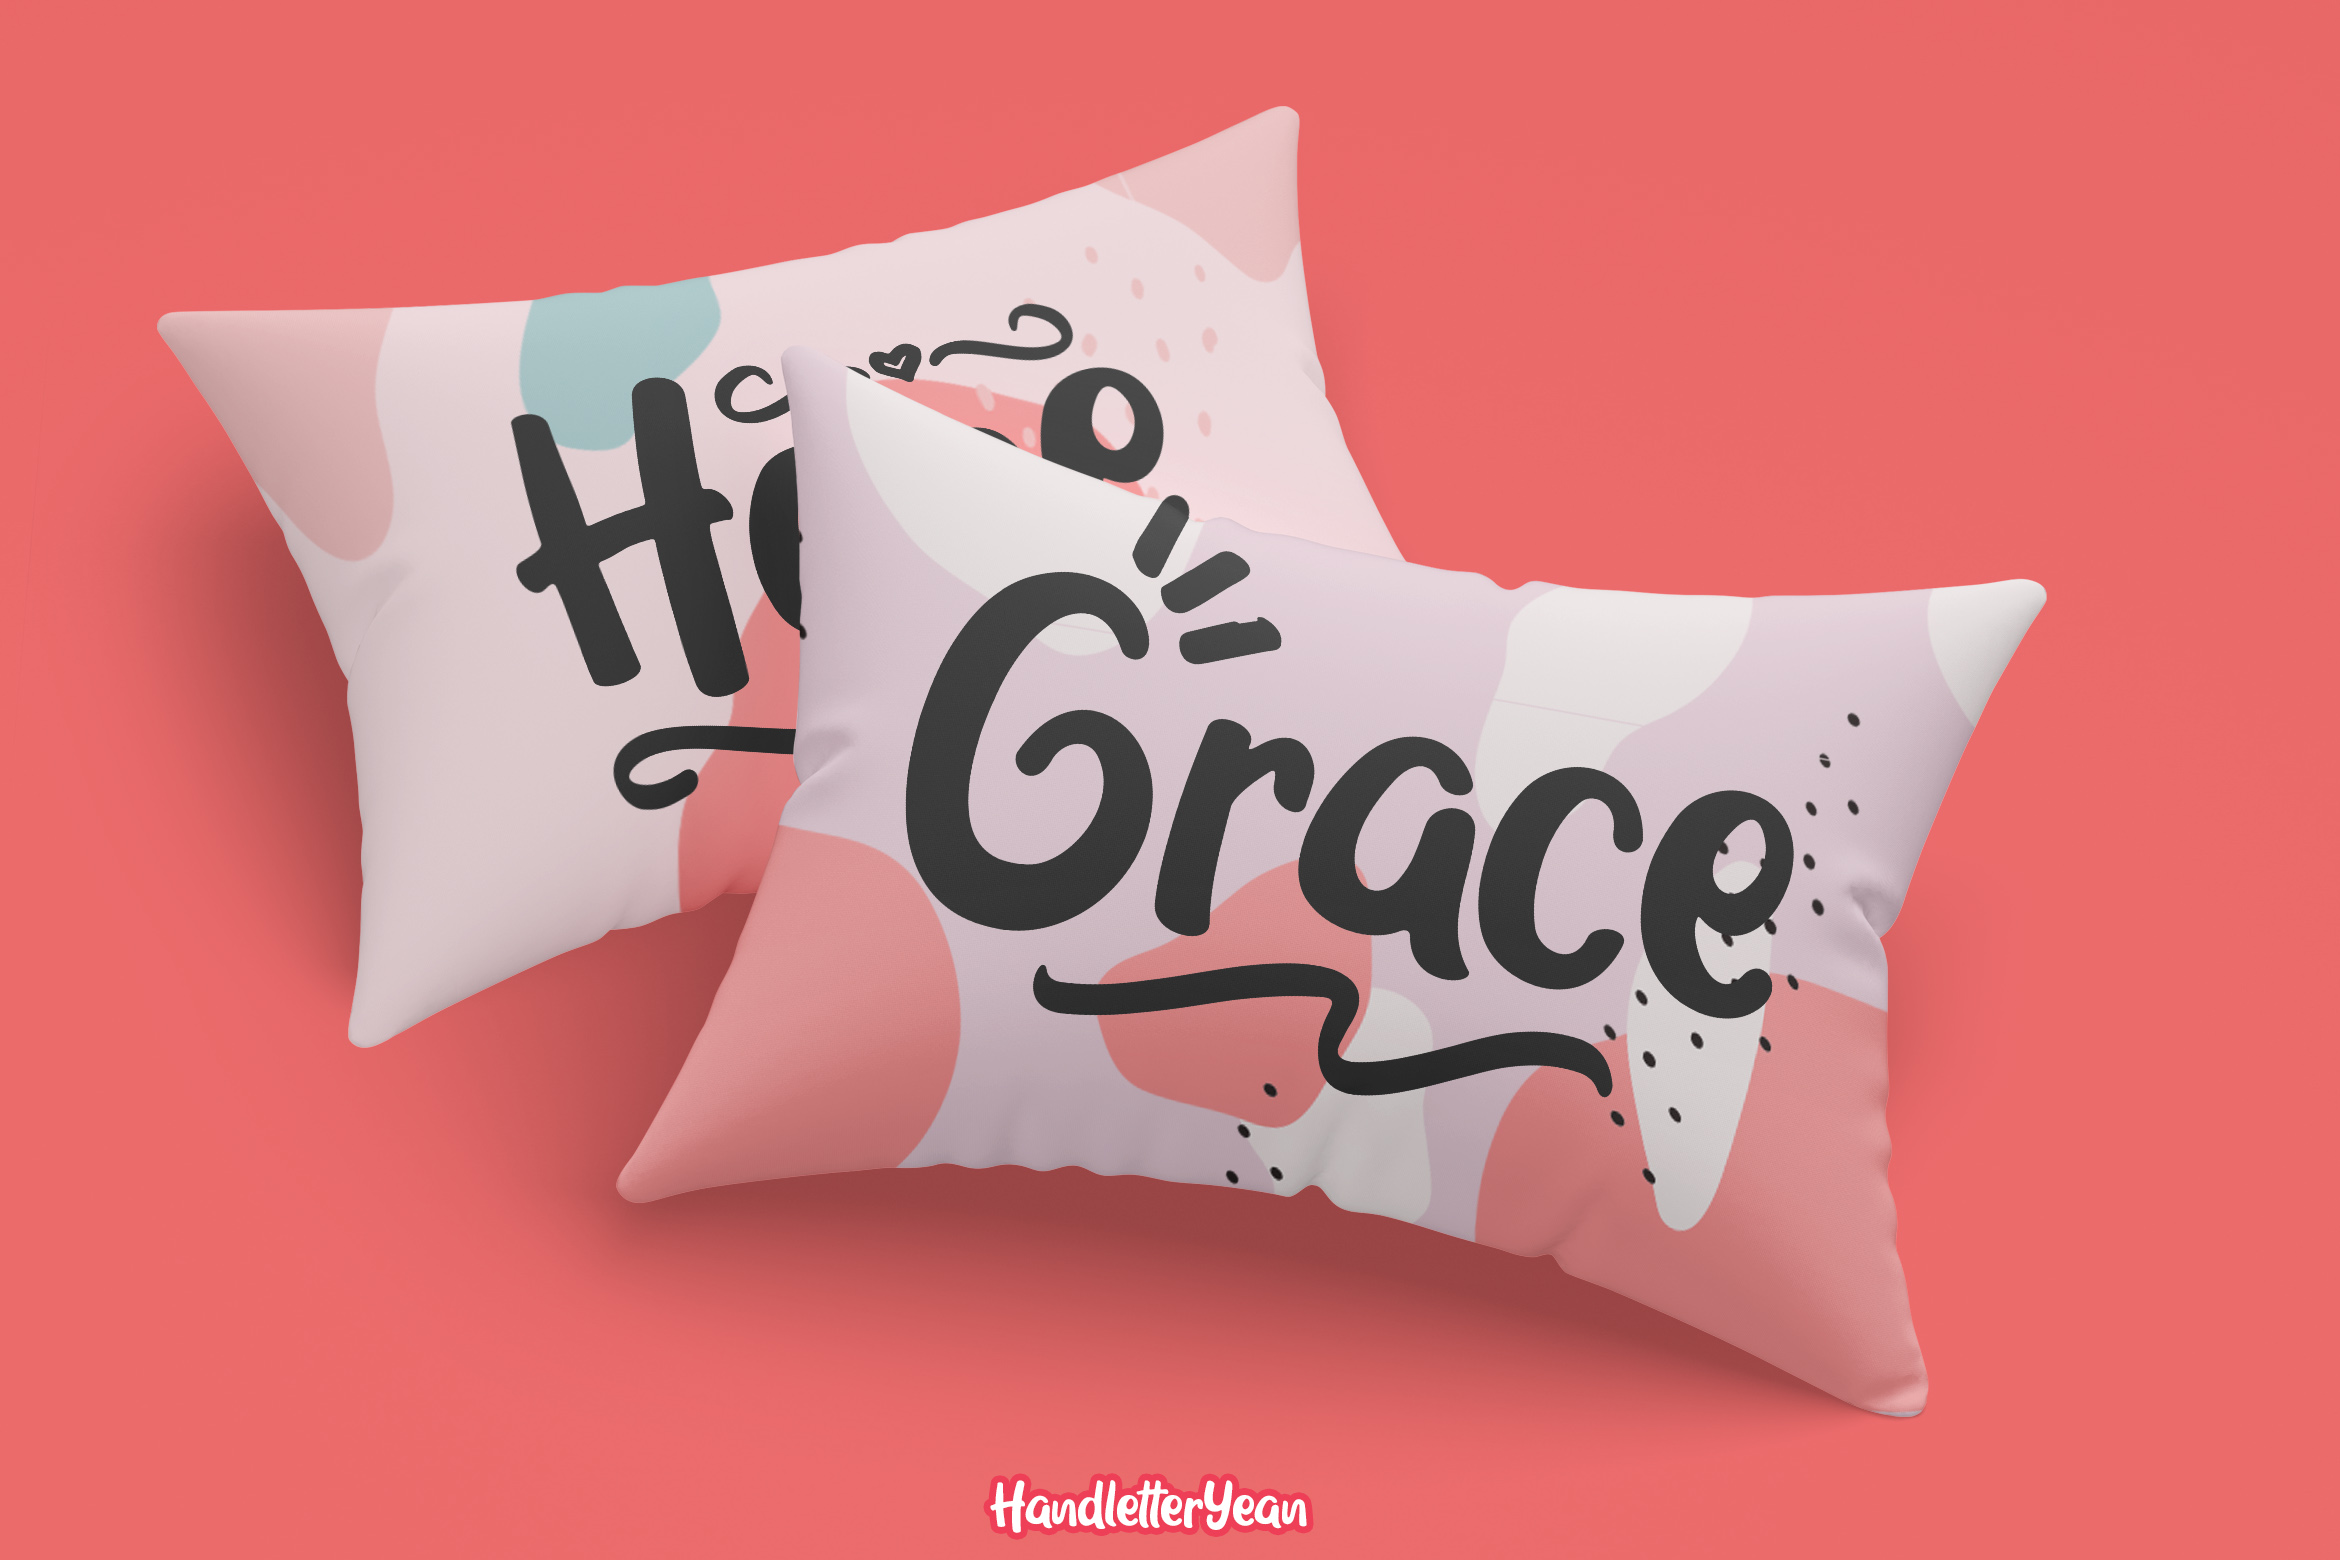 Grace & Hope